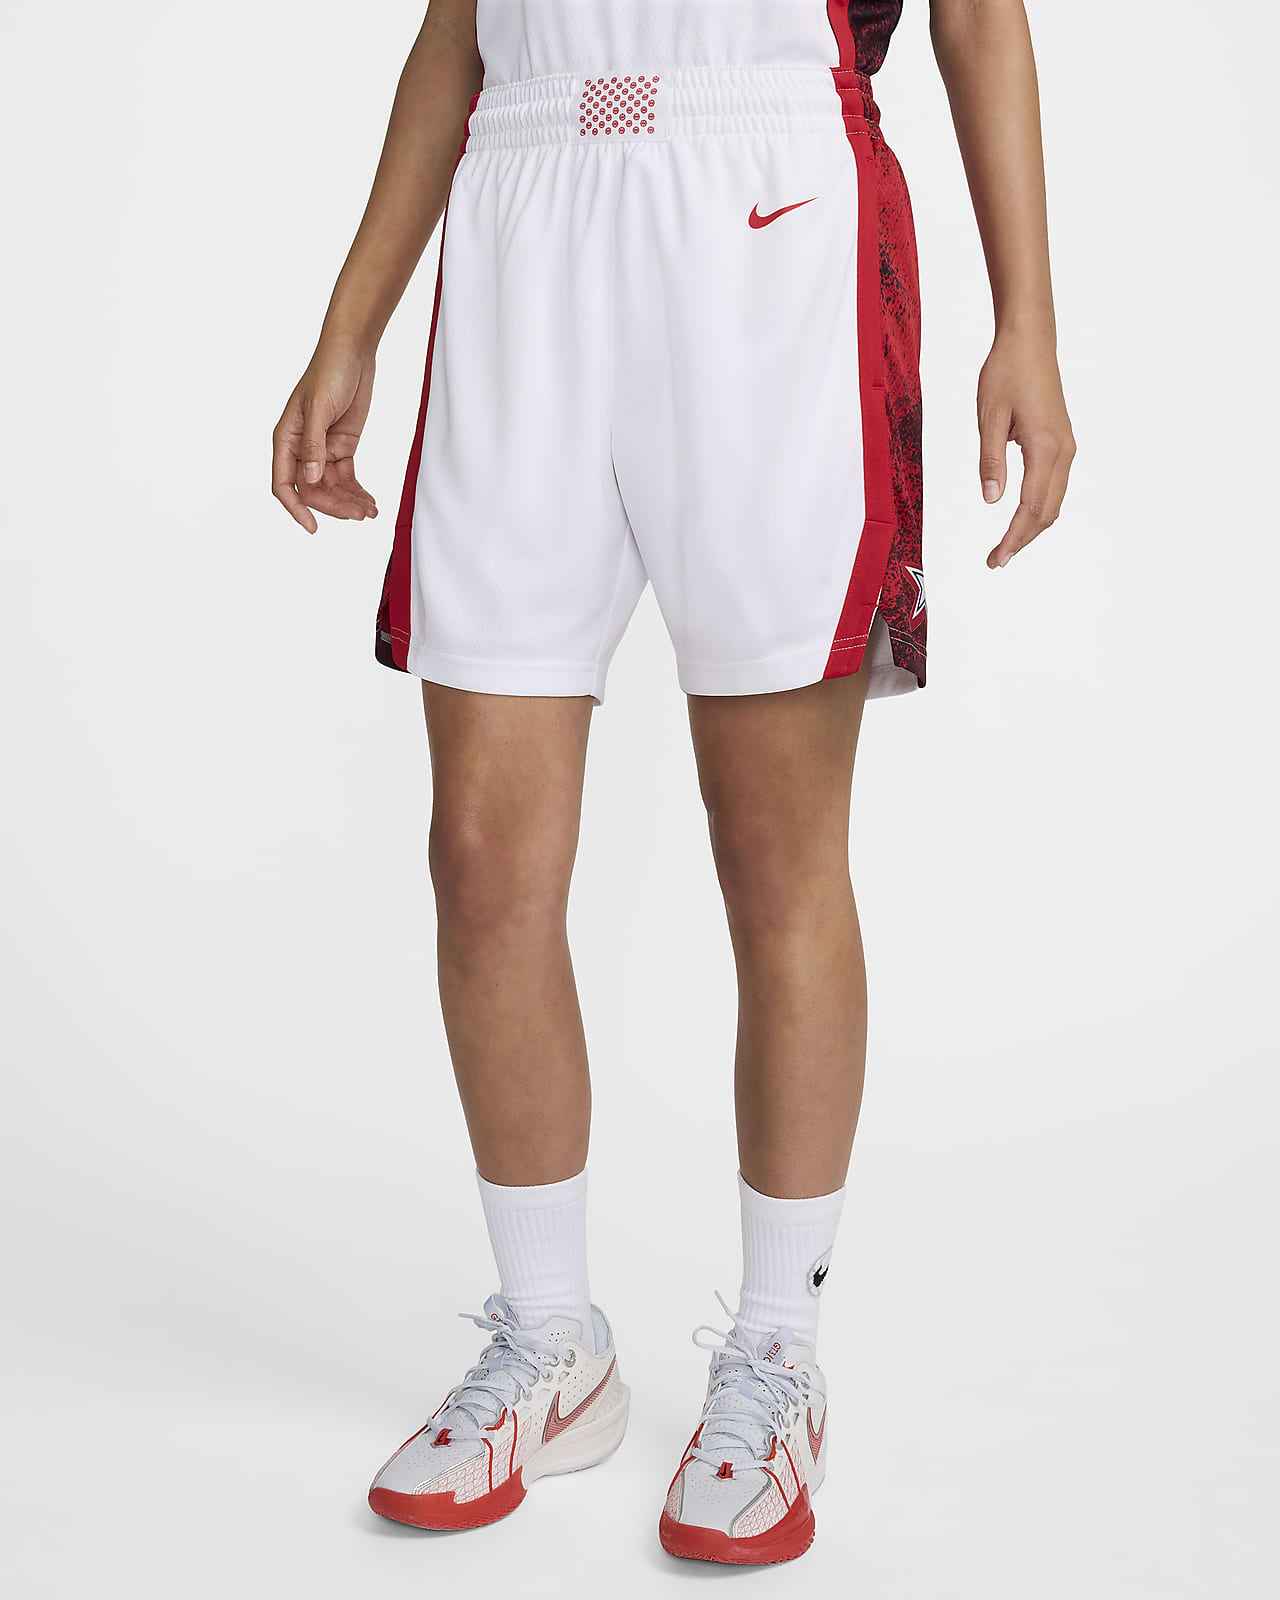 USA Limited Home Women's Nike Basketball Shorts